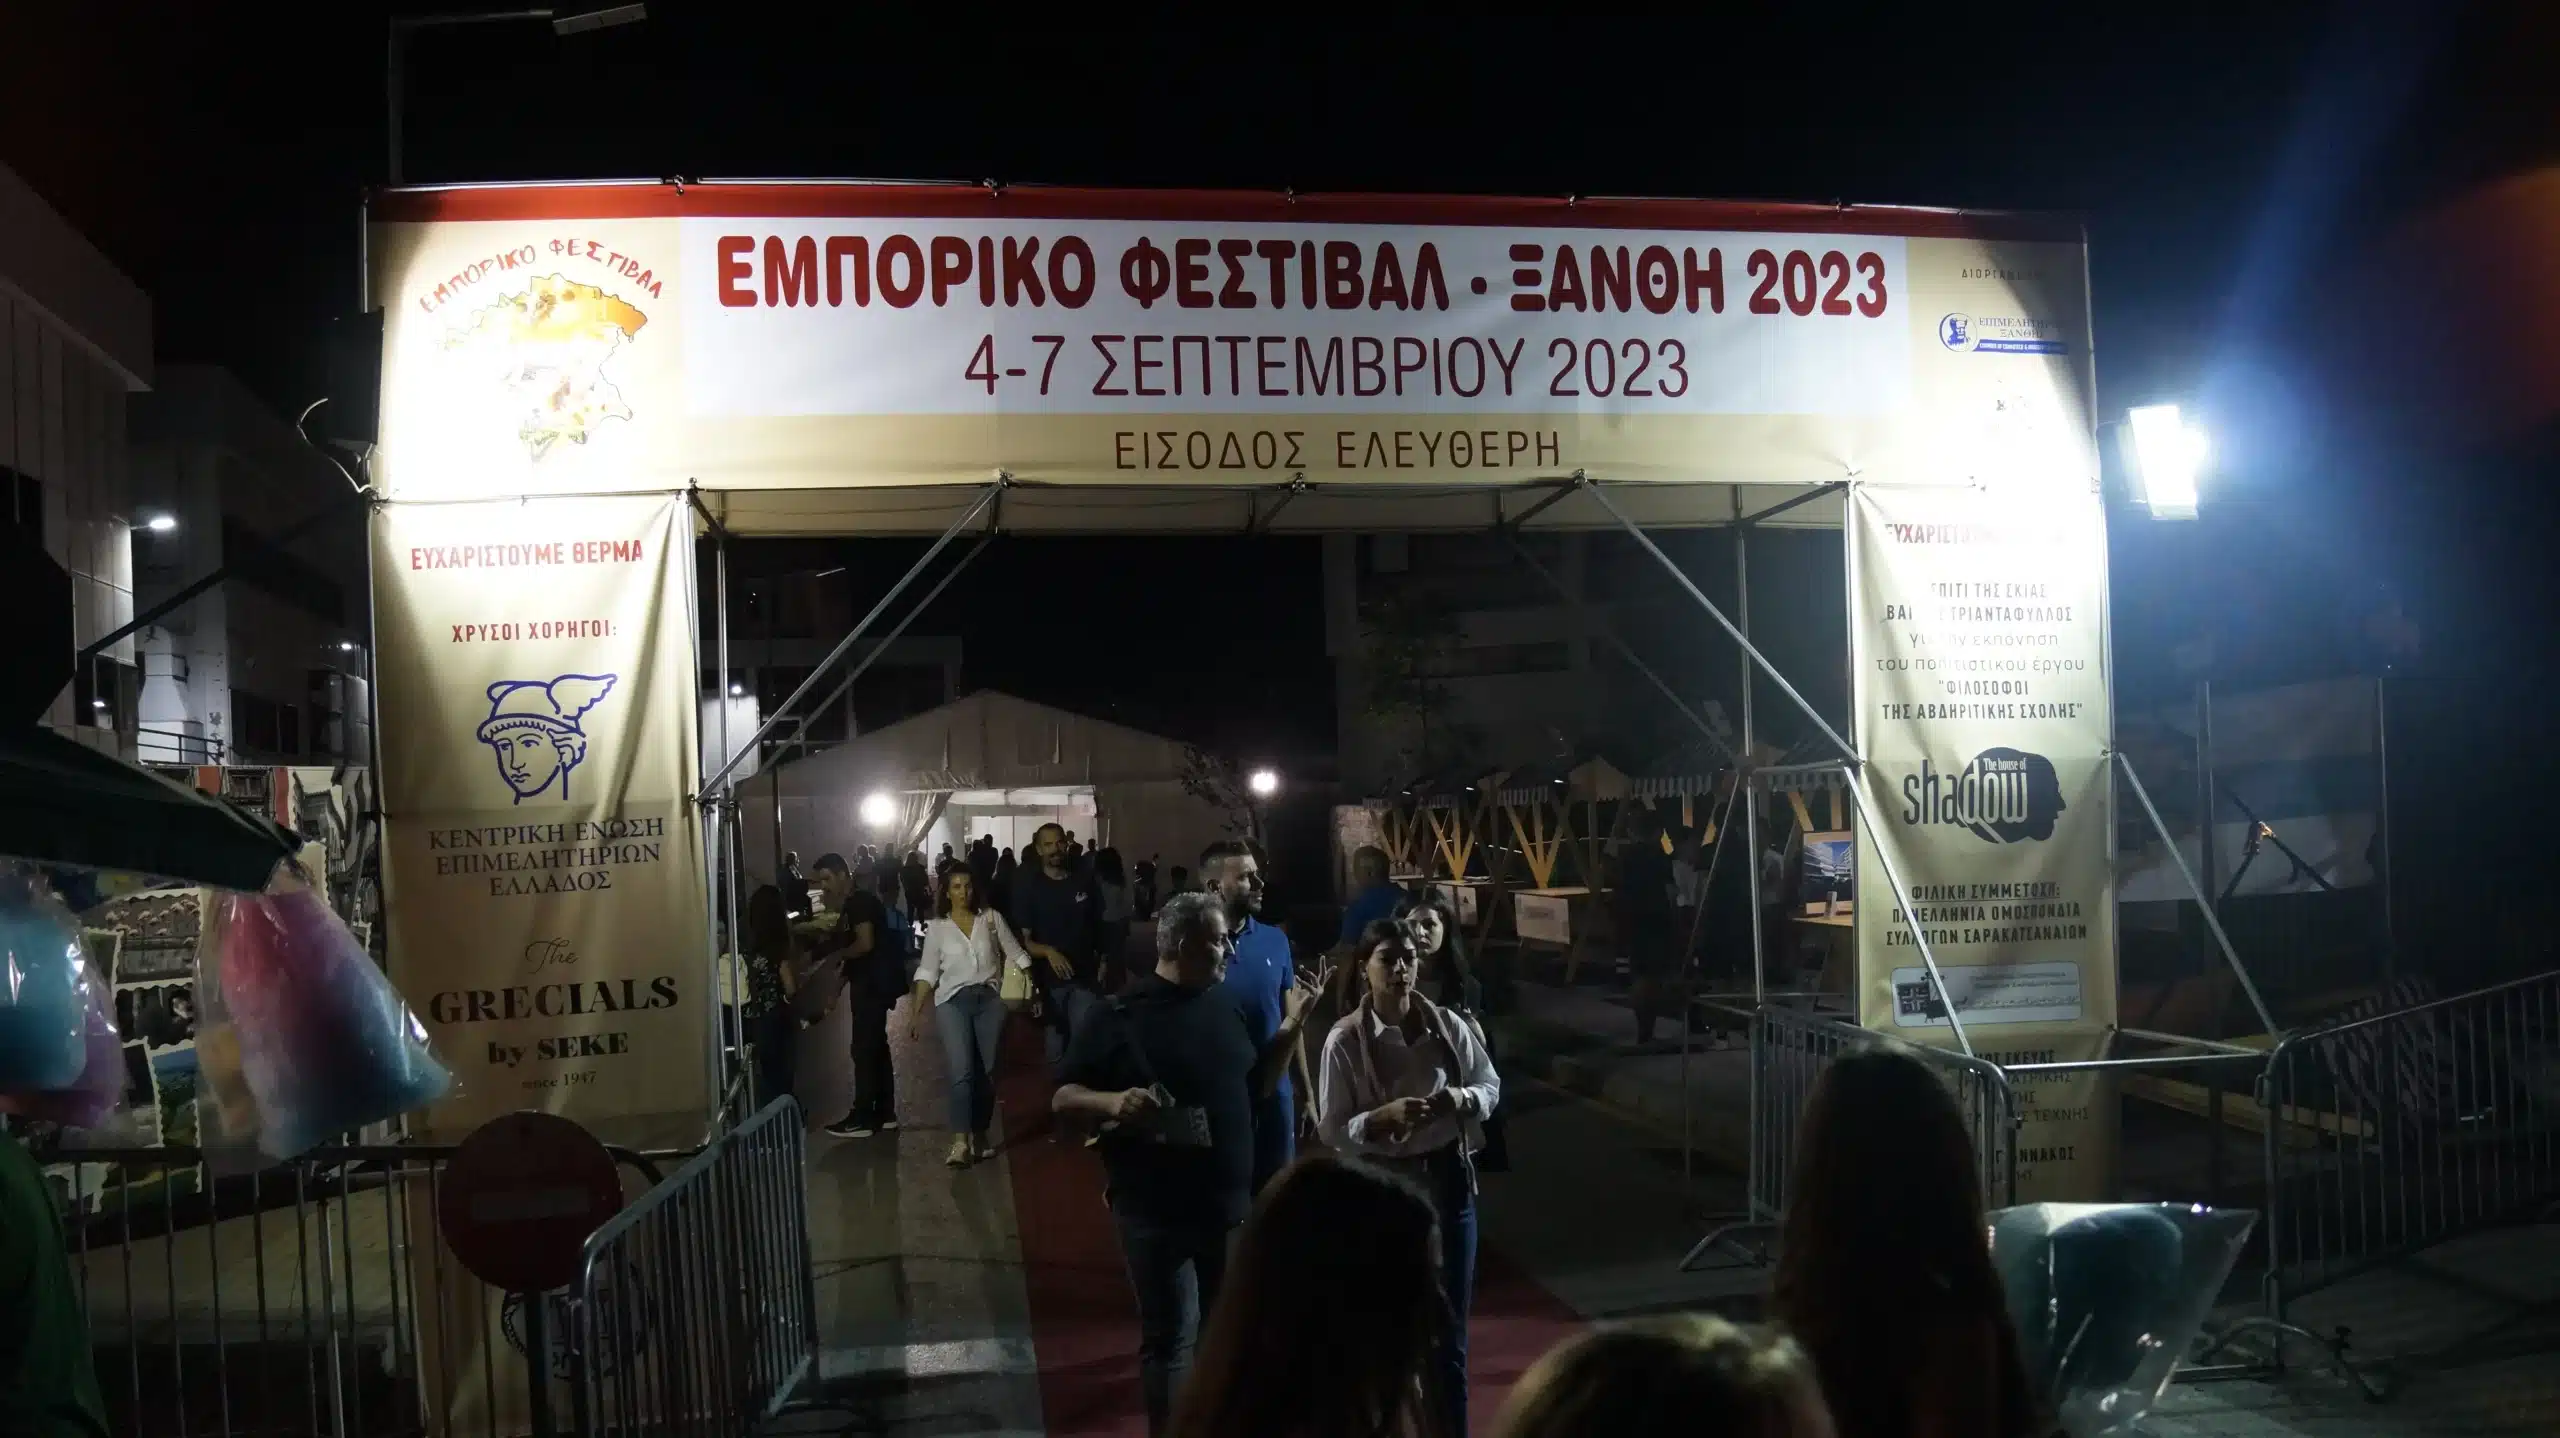 Brand festival - Xanthi 2023